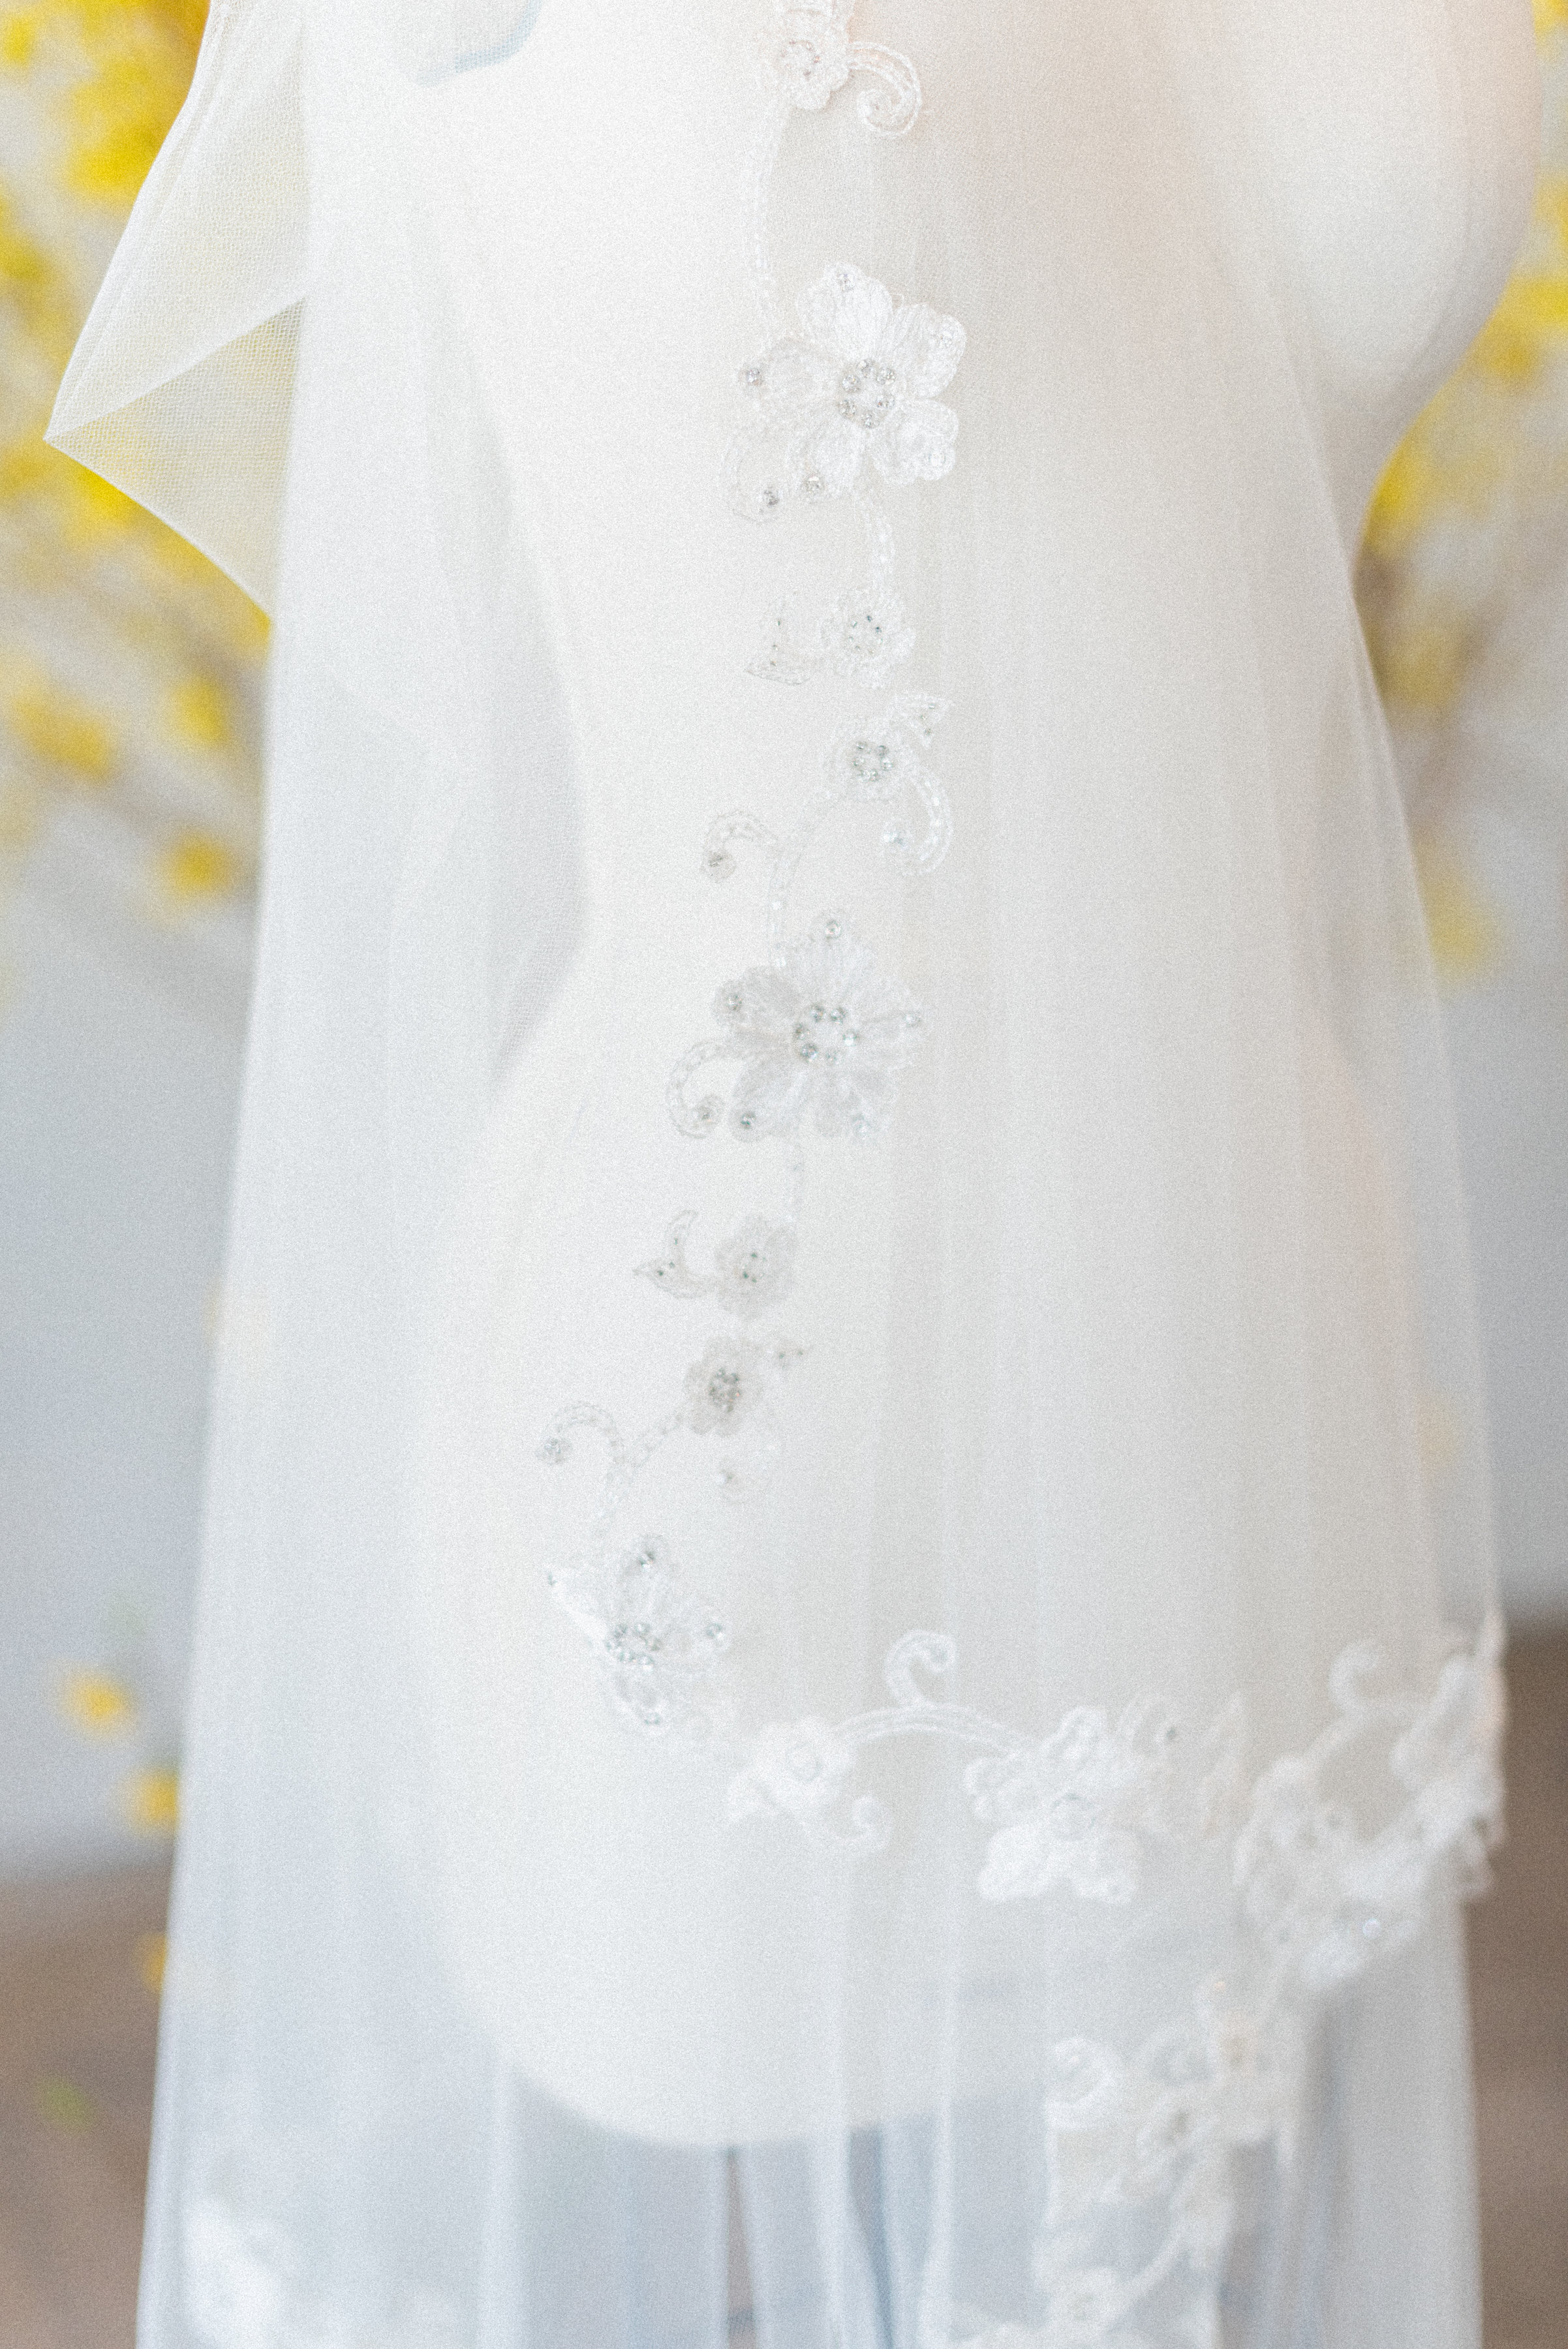  Claire Pettibone Heirloom veil | Spring Bridal Inspiration from Little White Dress Bridal Shop in Denver, Colorado | Decorus Photography 